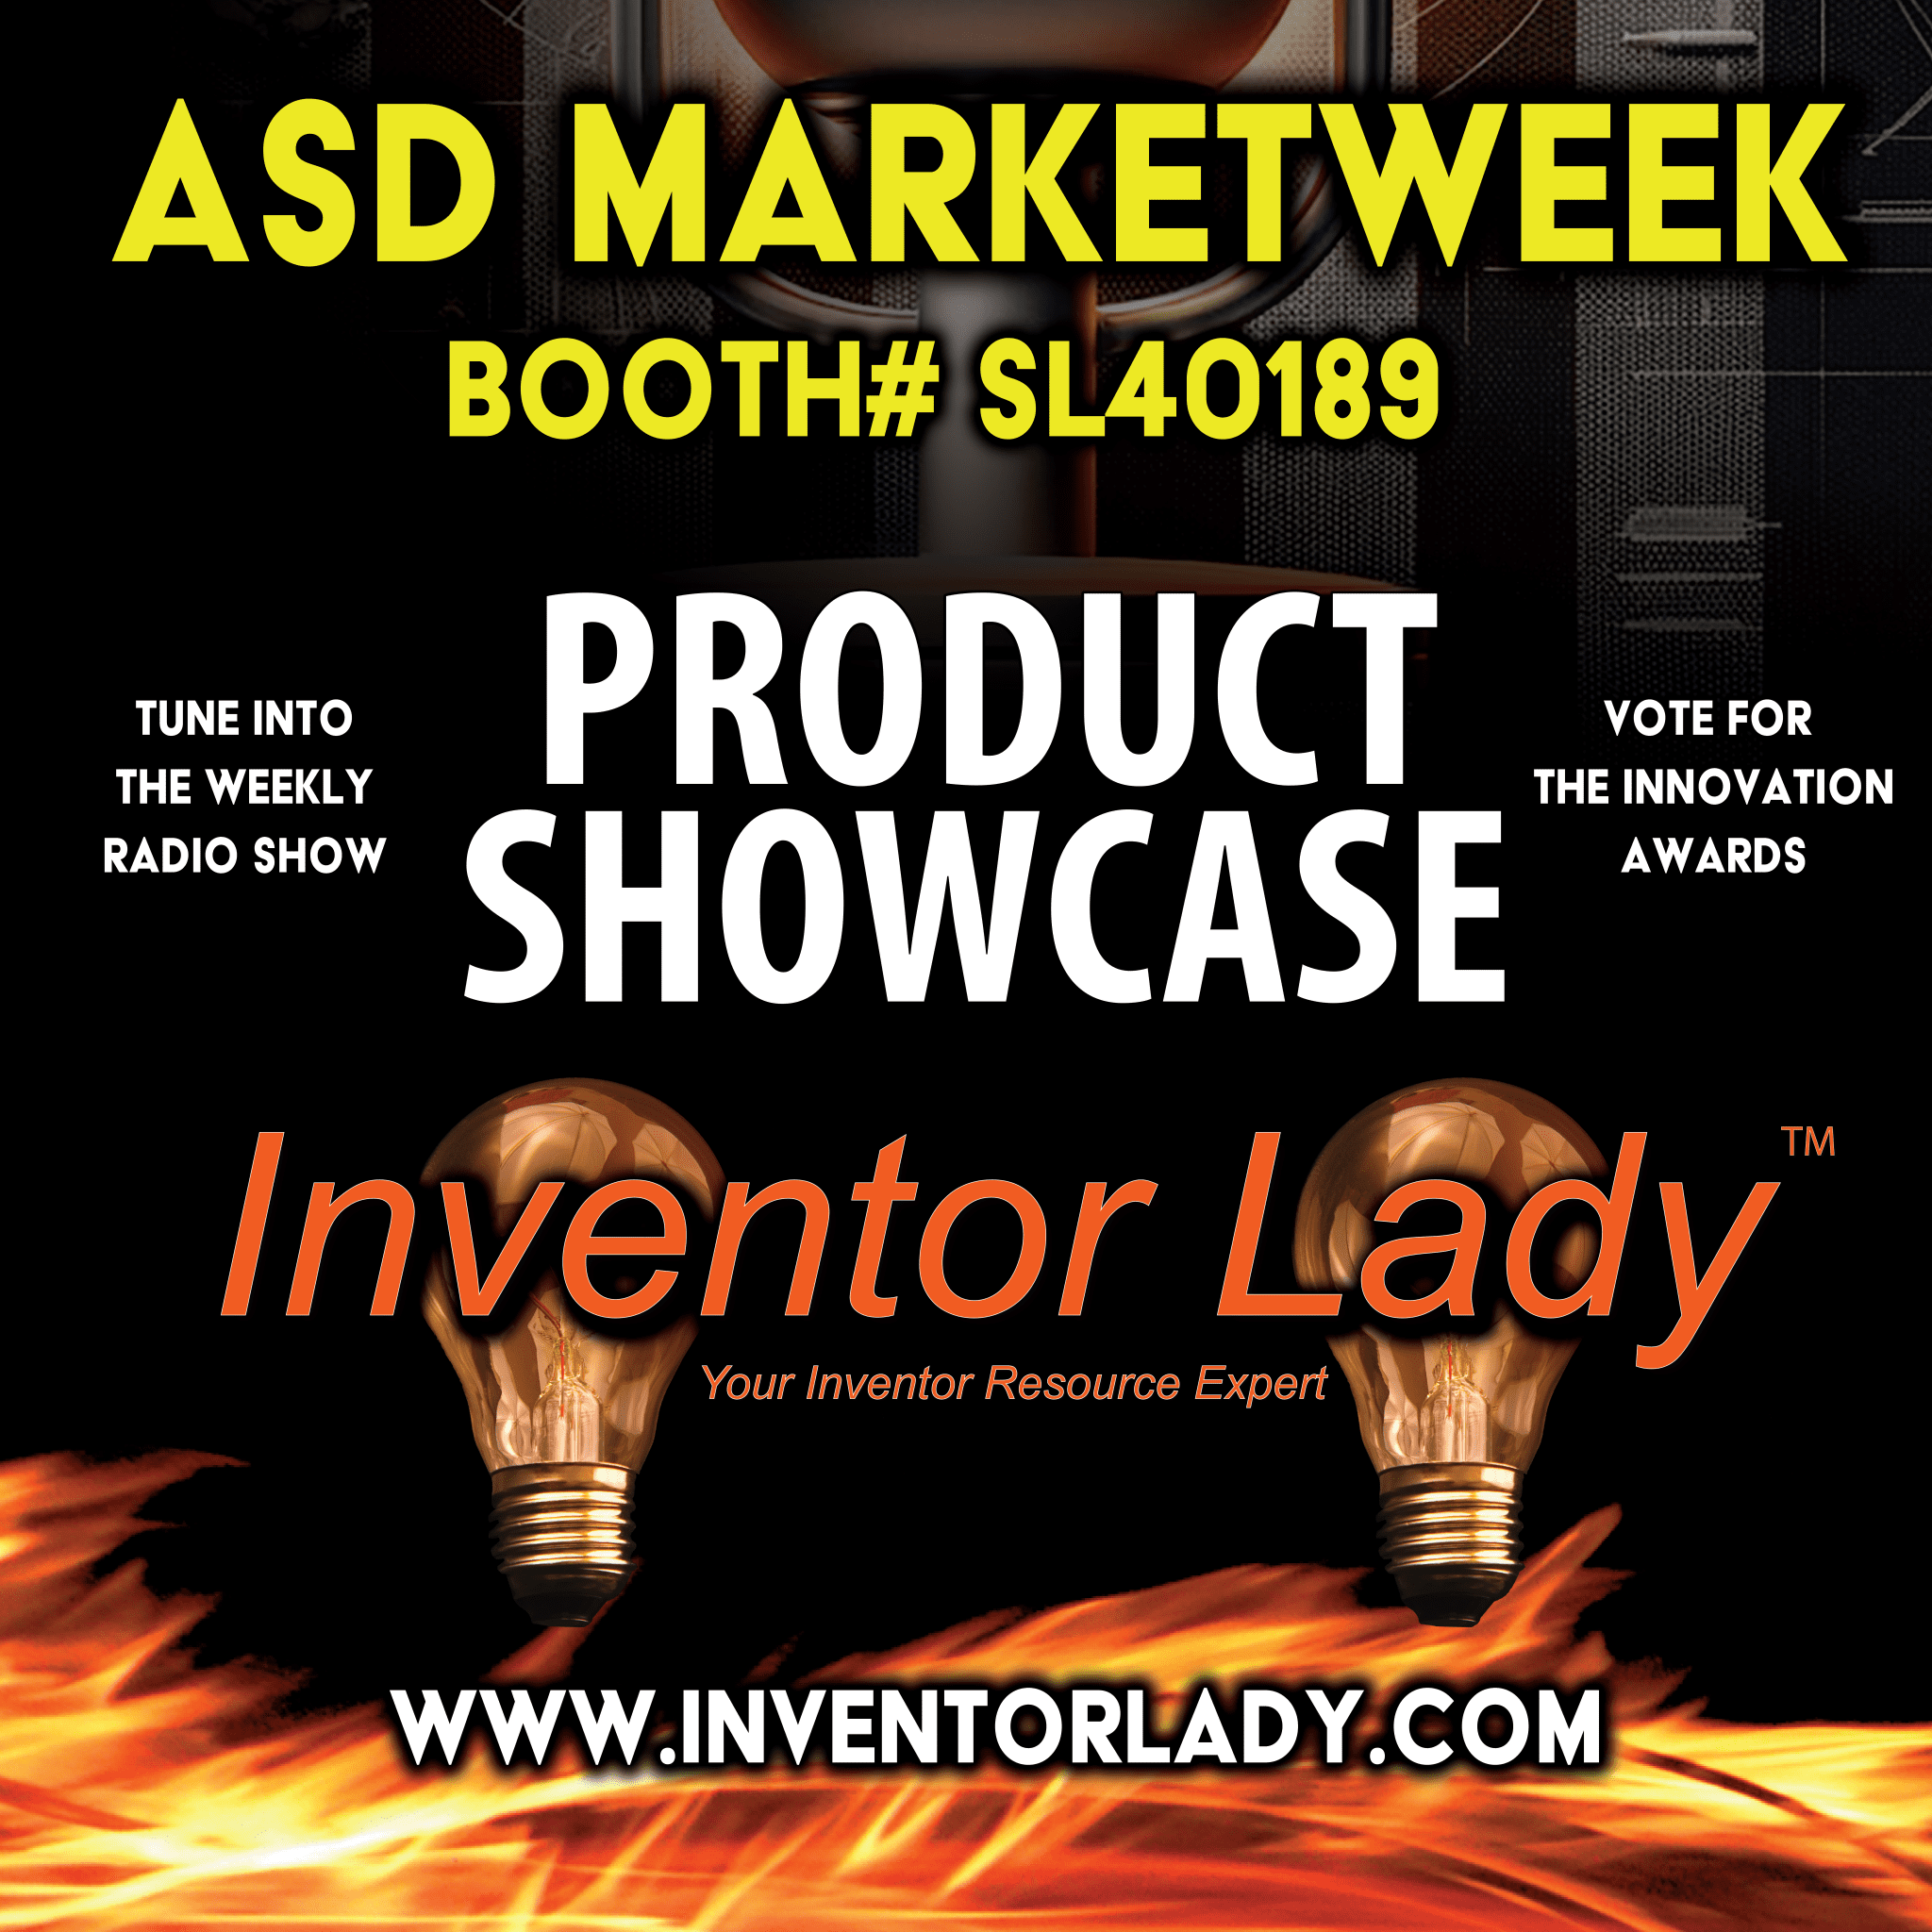 Join Invent America at ASD Marketweek